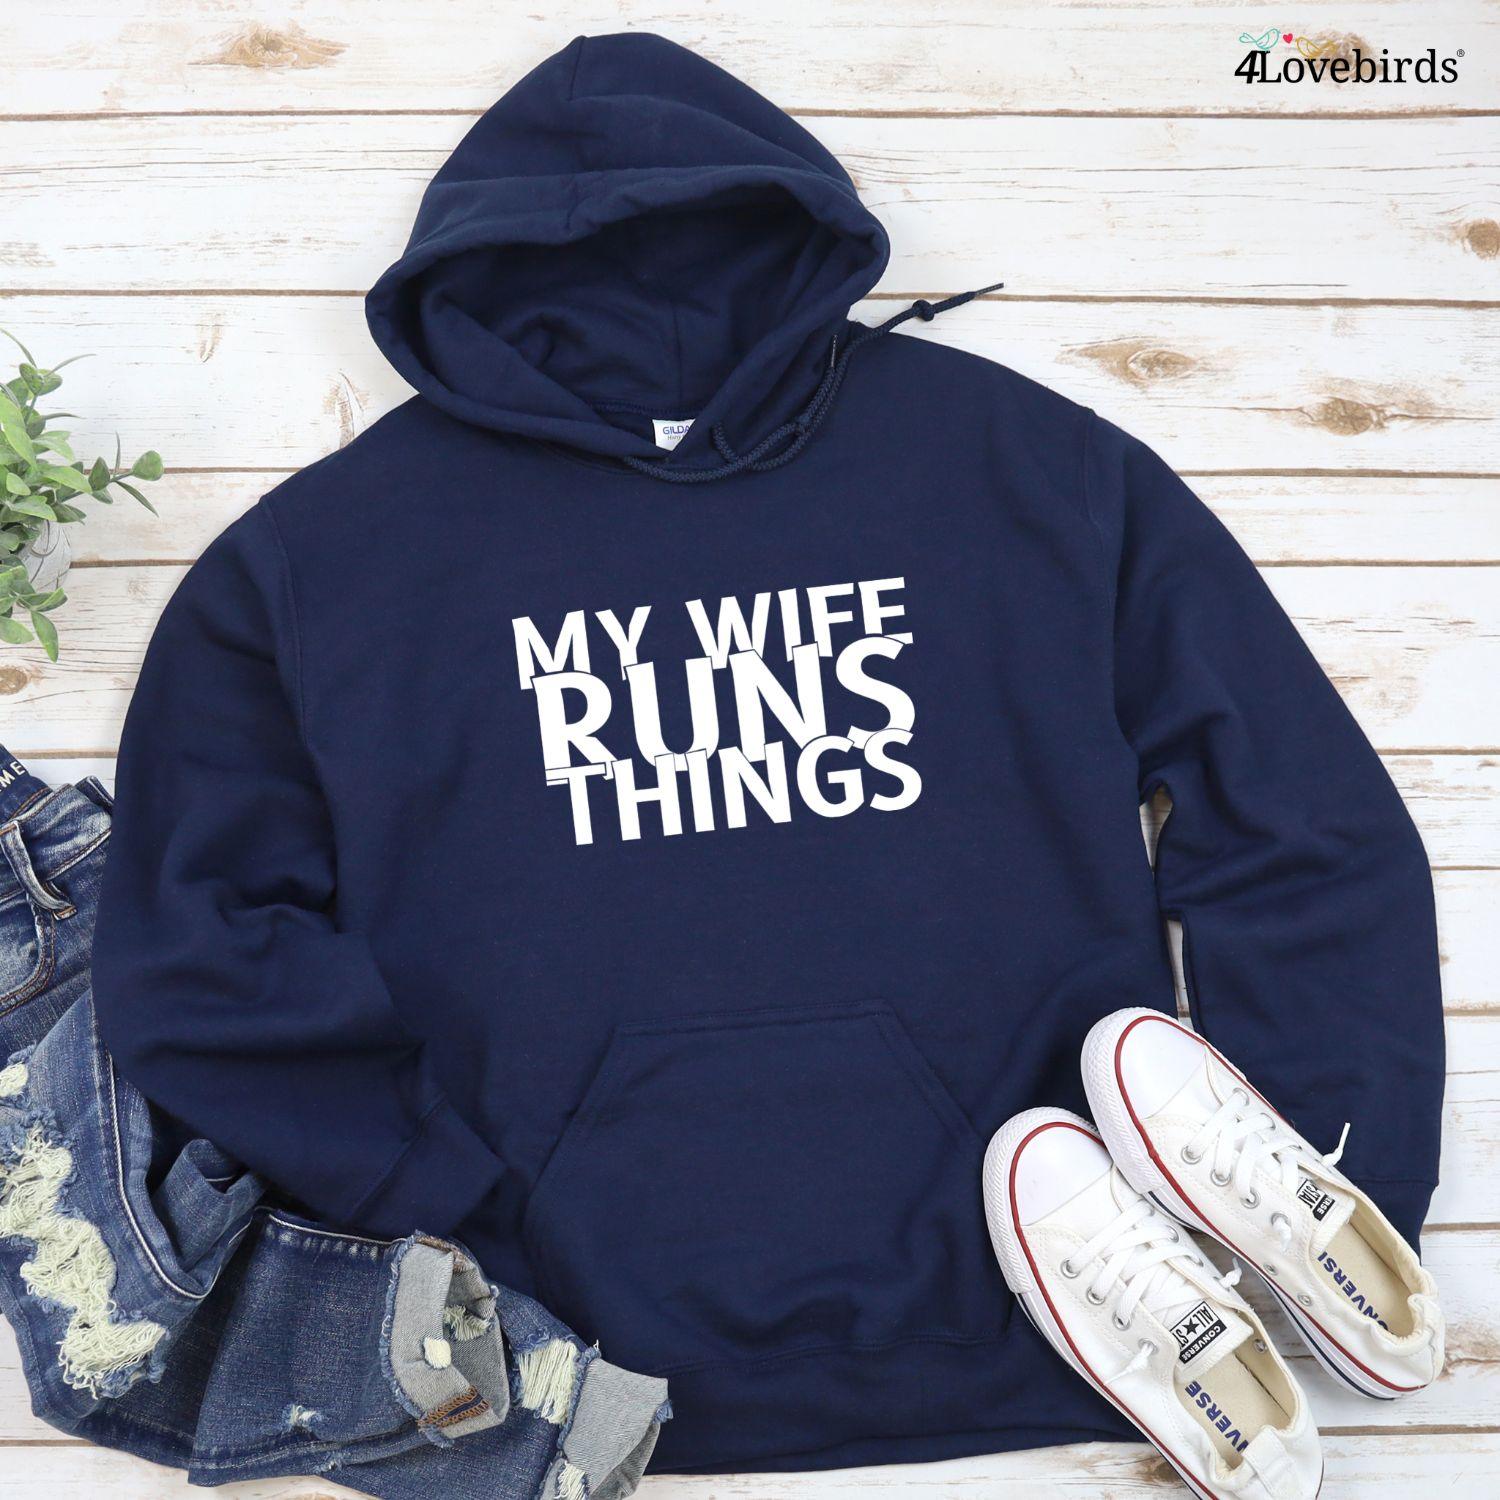 Matching Set: Funny Husband/Wife Hoodie & Sweatshirt - Wedding/Anniv Gift Idea - 4Lovebirds